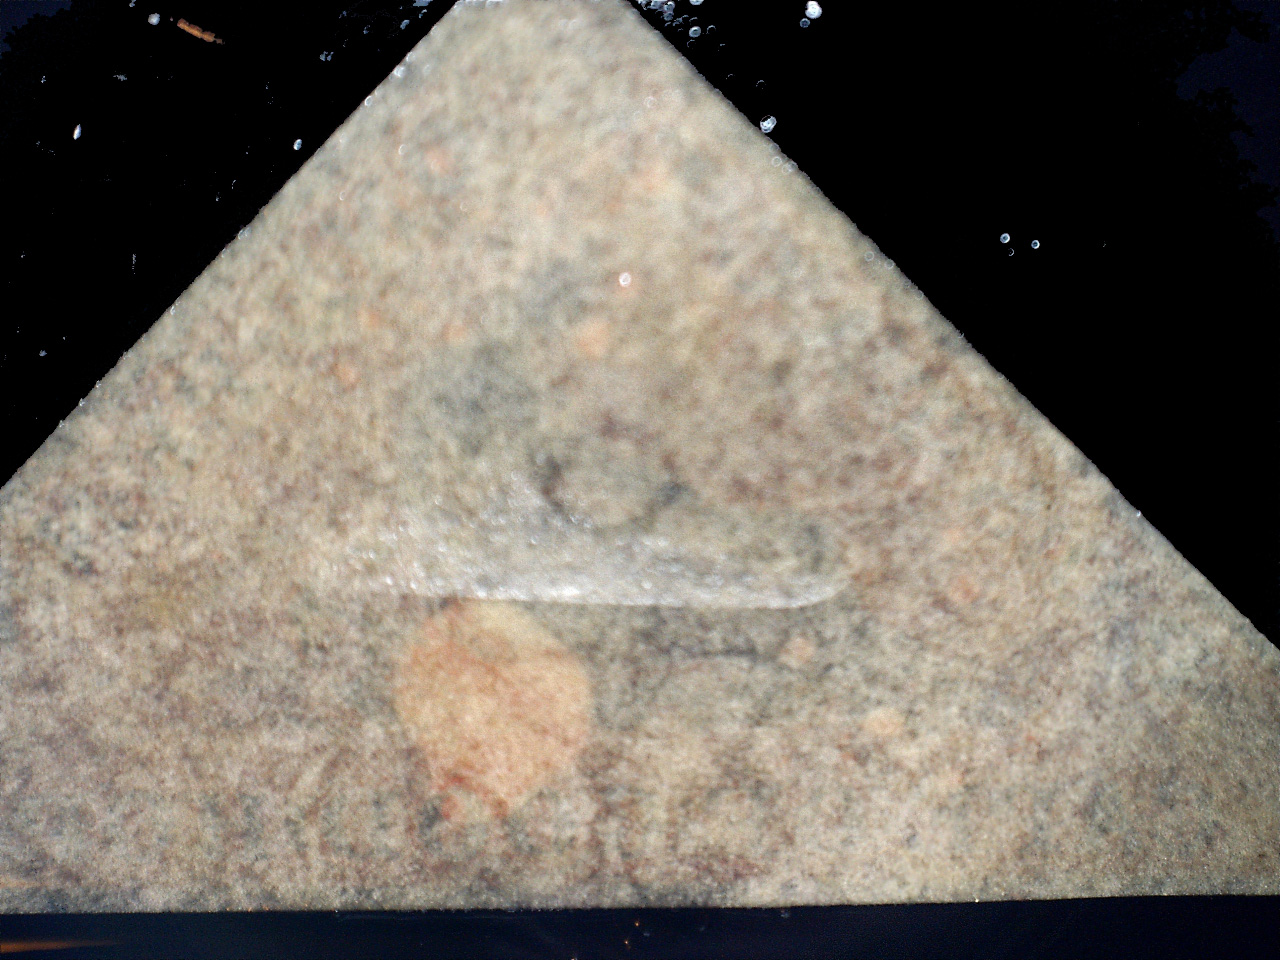 Cape of Good Hope #3a Hope Seated Triangle; Unused - Click Image to Close